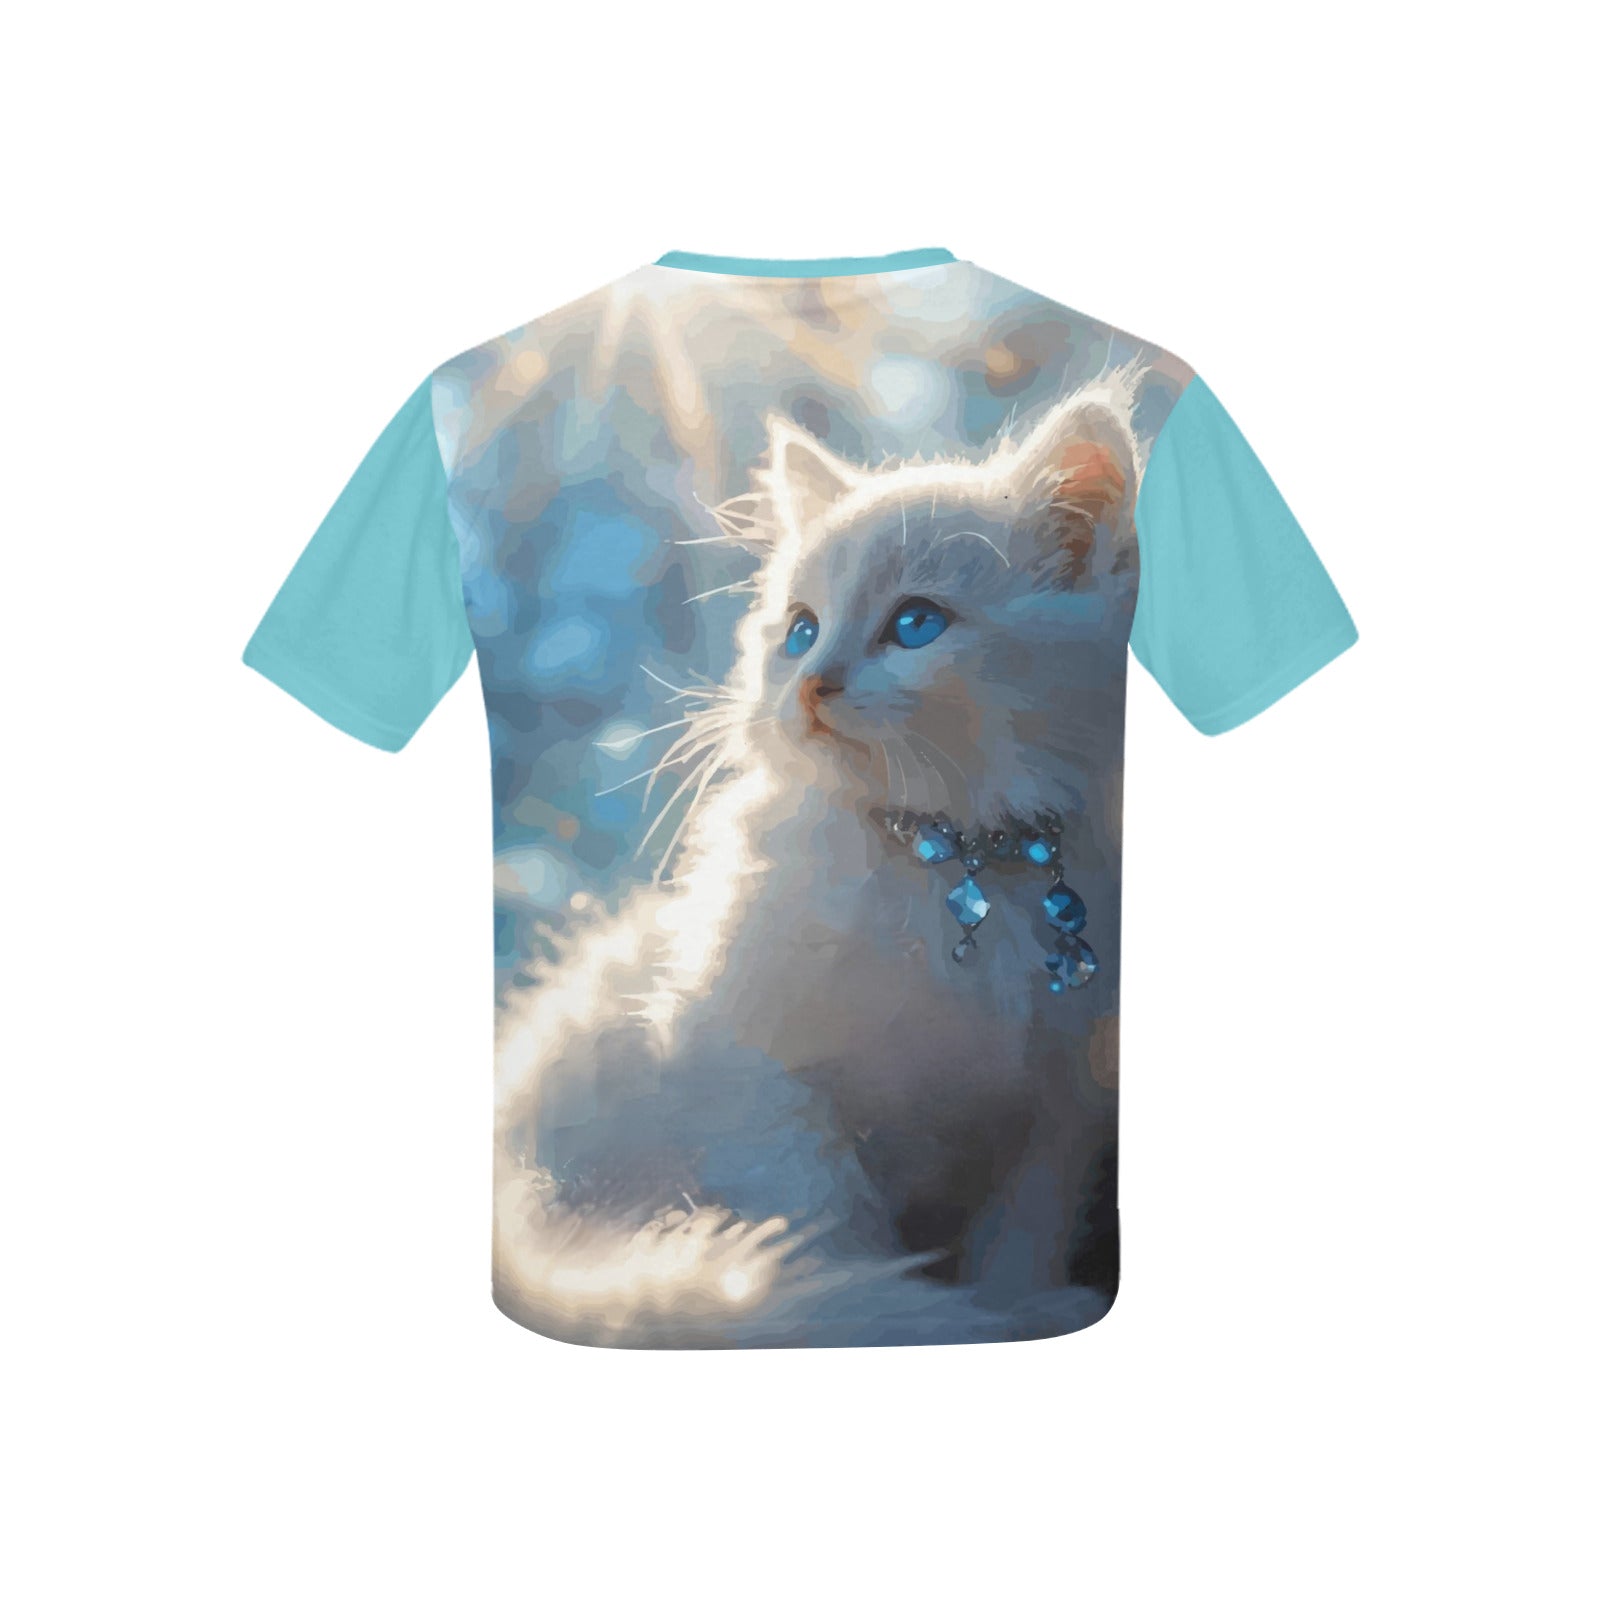 Child's Fluffy White Kitten Printed Shirt (Made in USA)